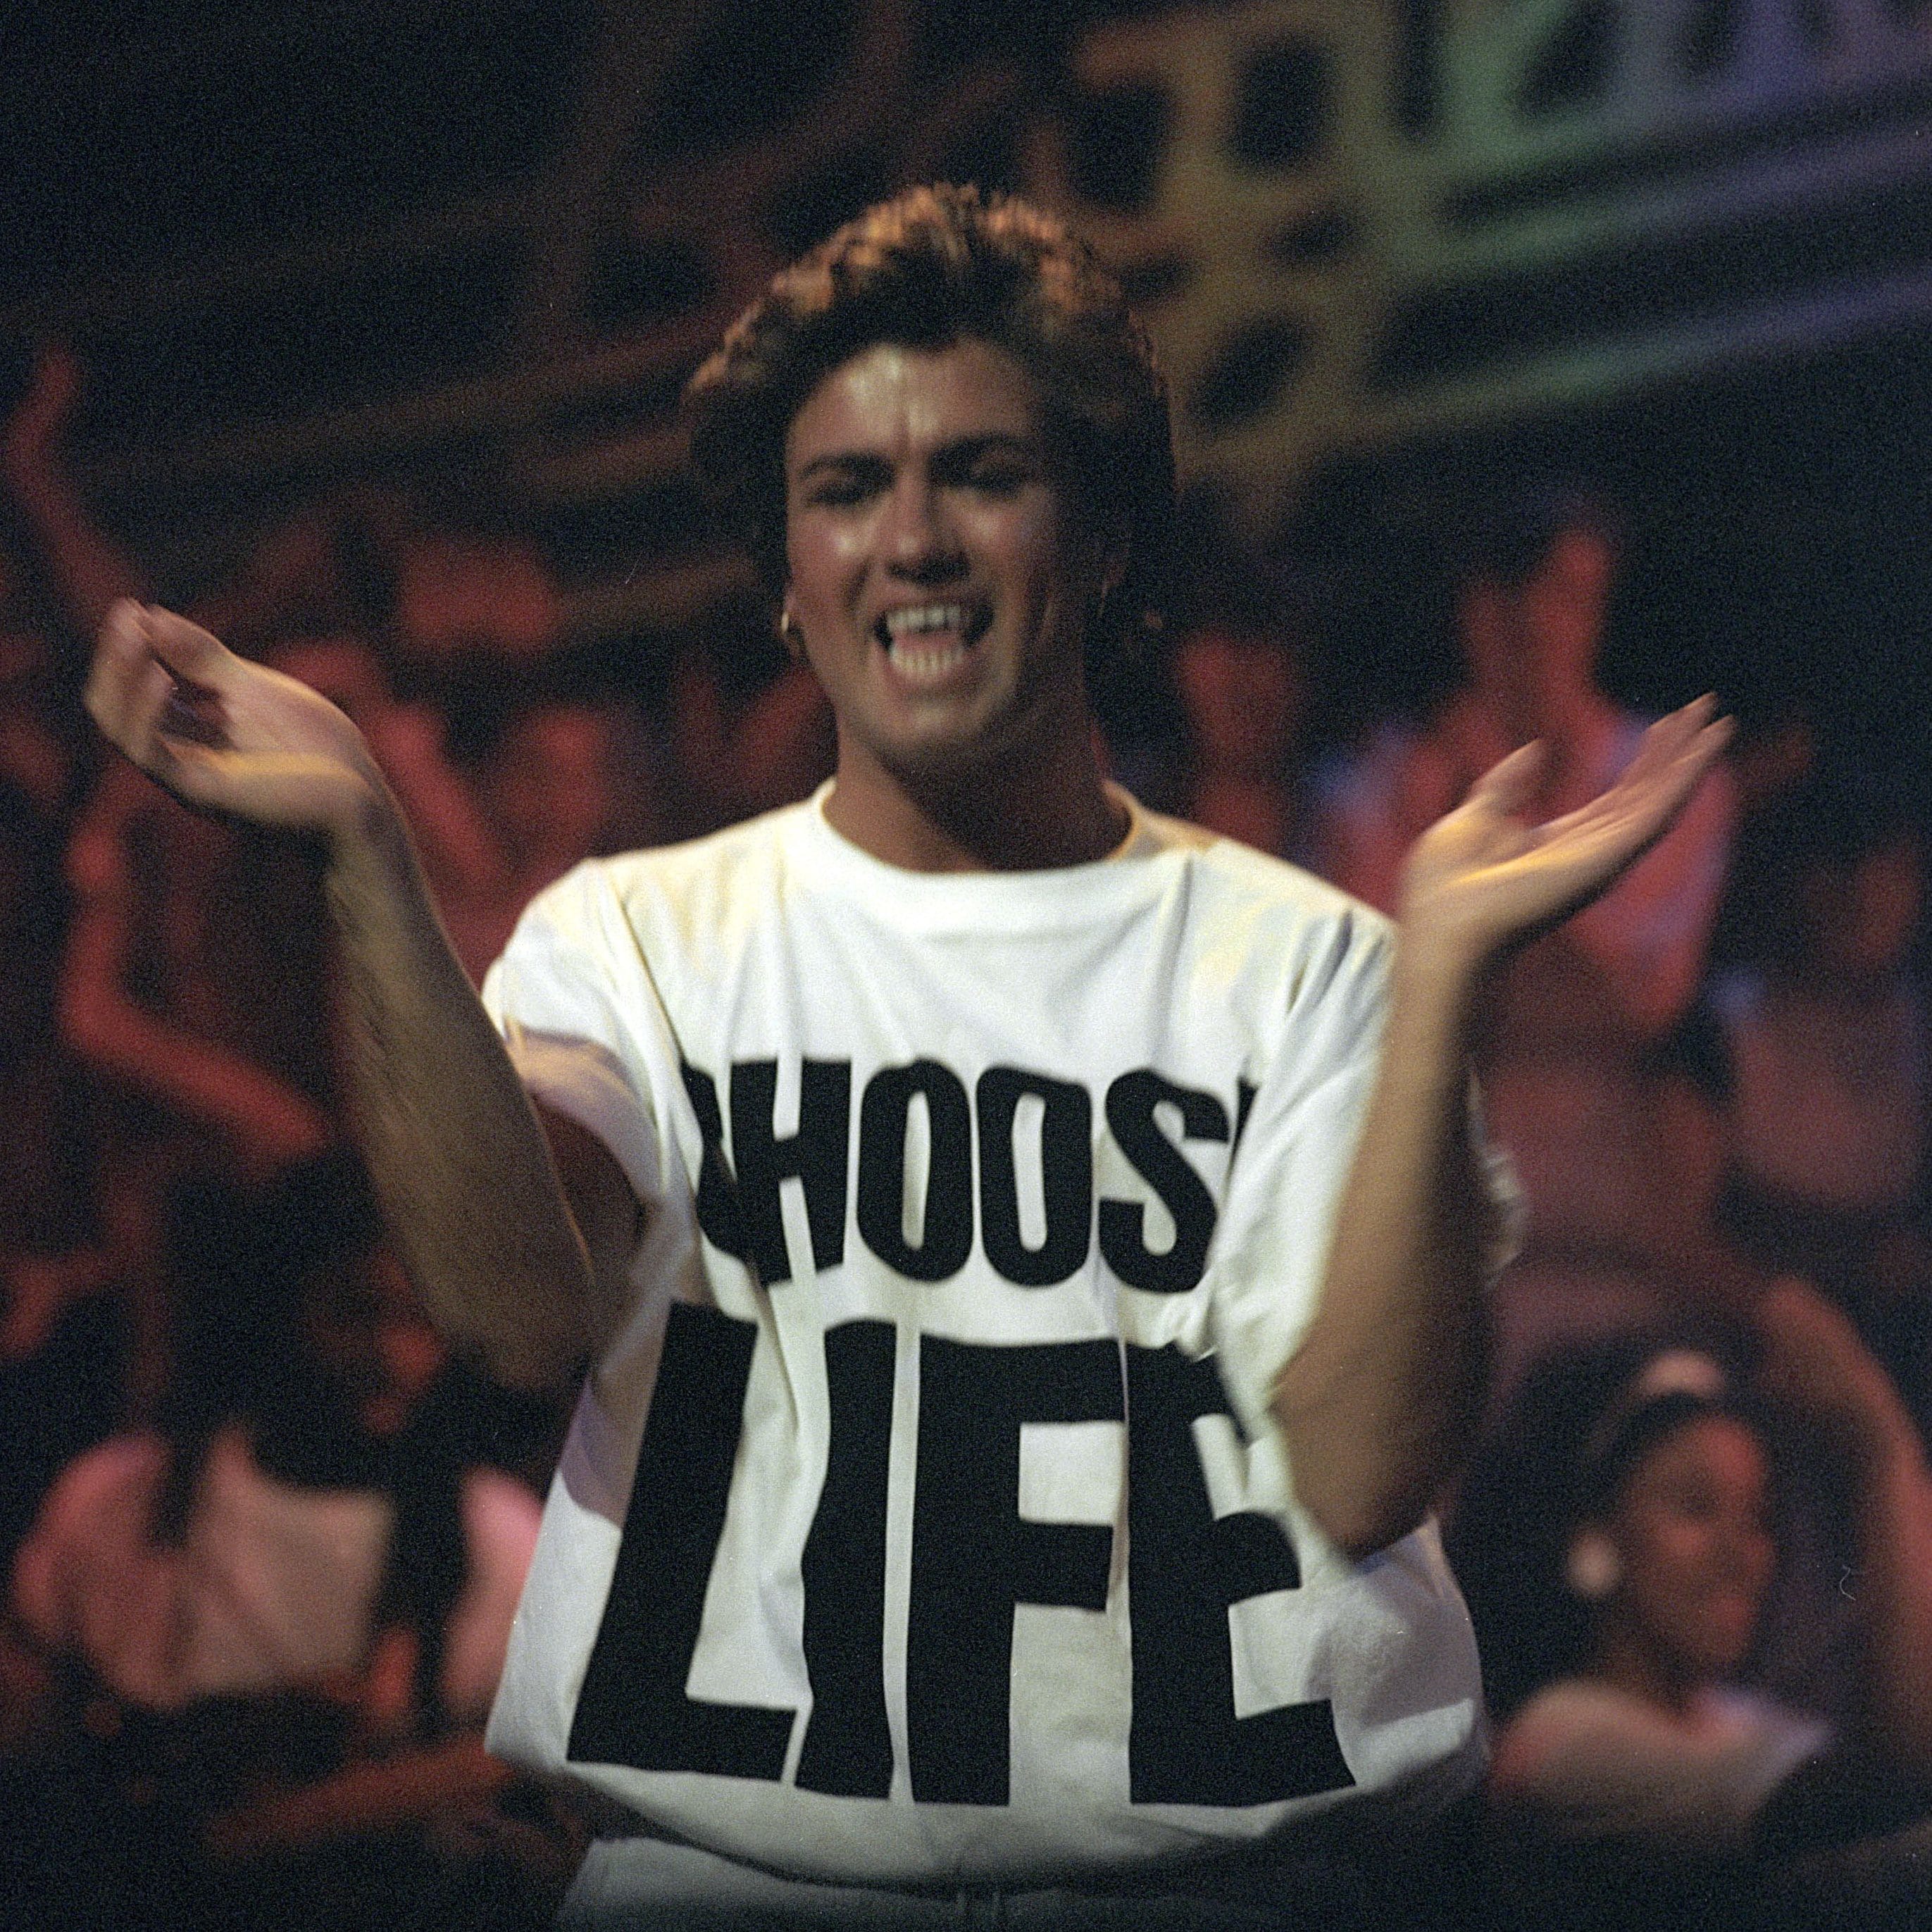 “Choose Life”: La historia tras la famosa polera de George Michael